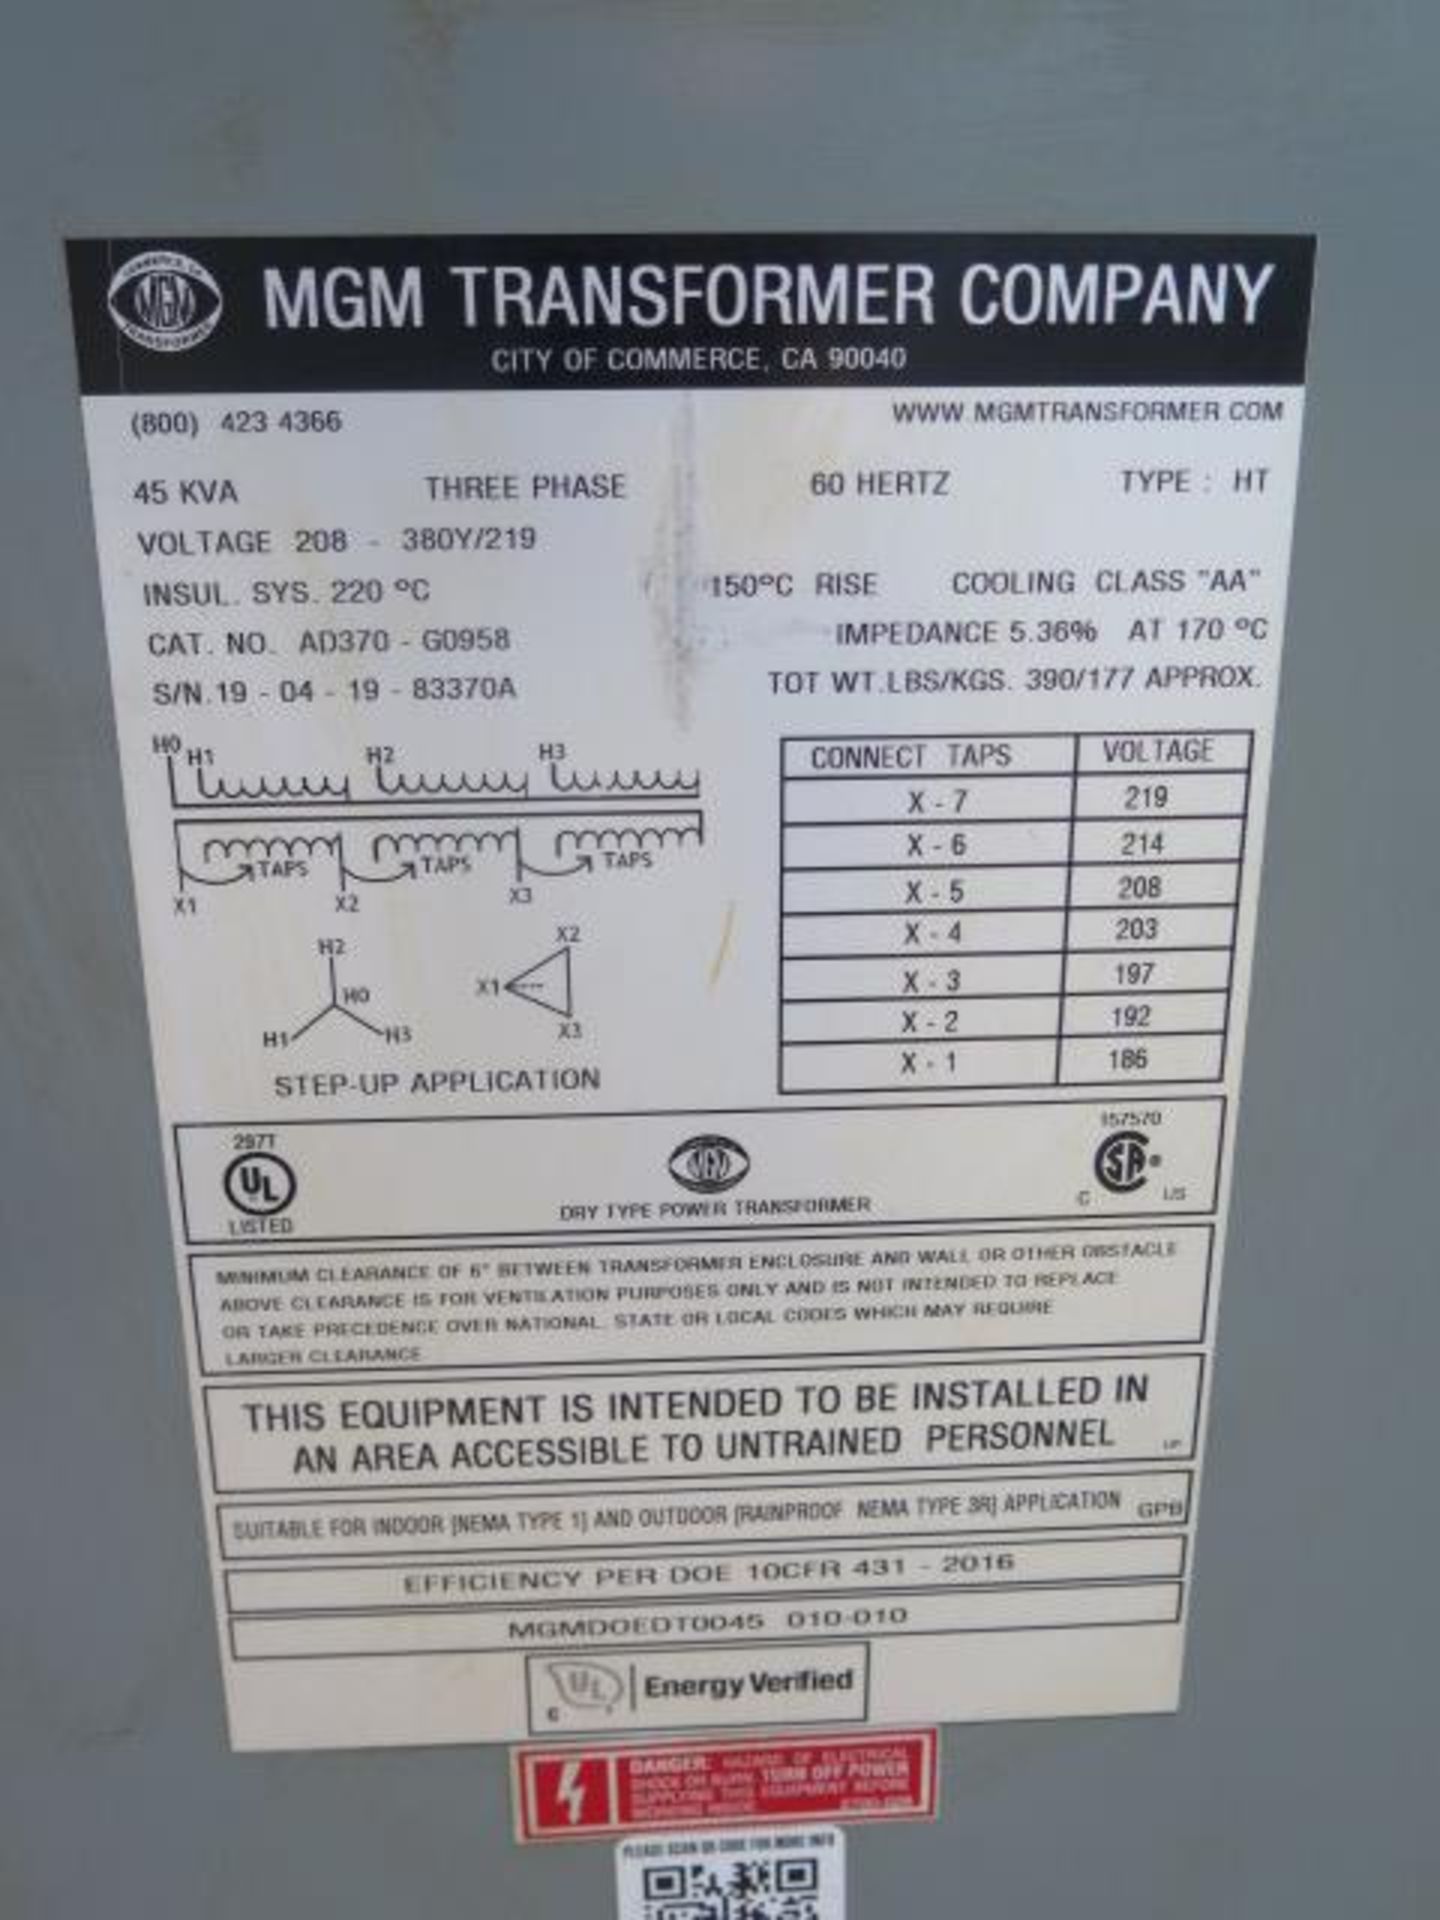 MGM 45kVA Transformer 208-380Y/219 (SOLD AS-IS - NO WARRANTY) - Image 4 of 4